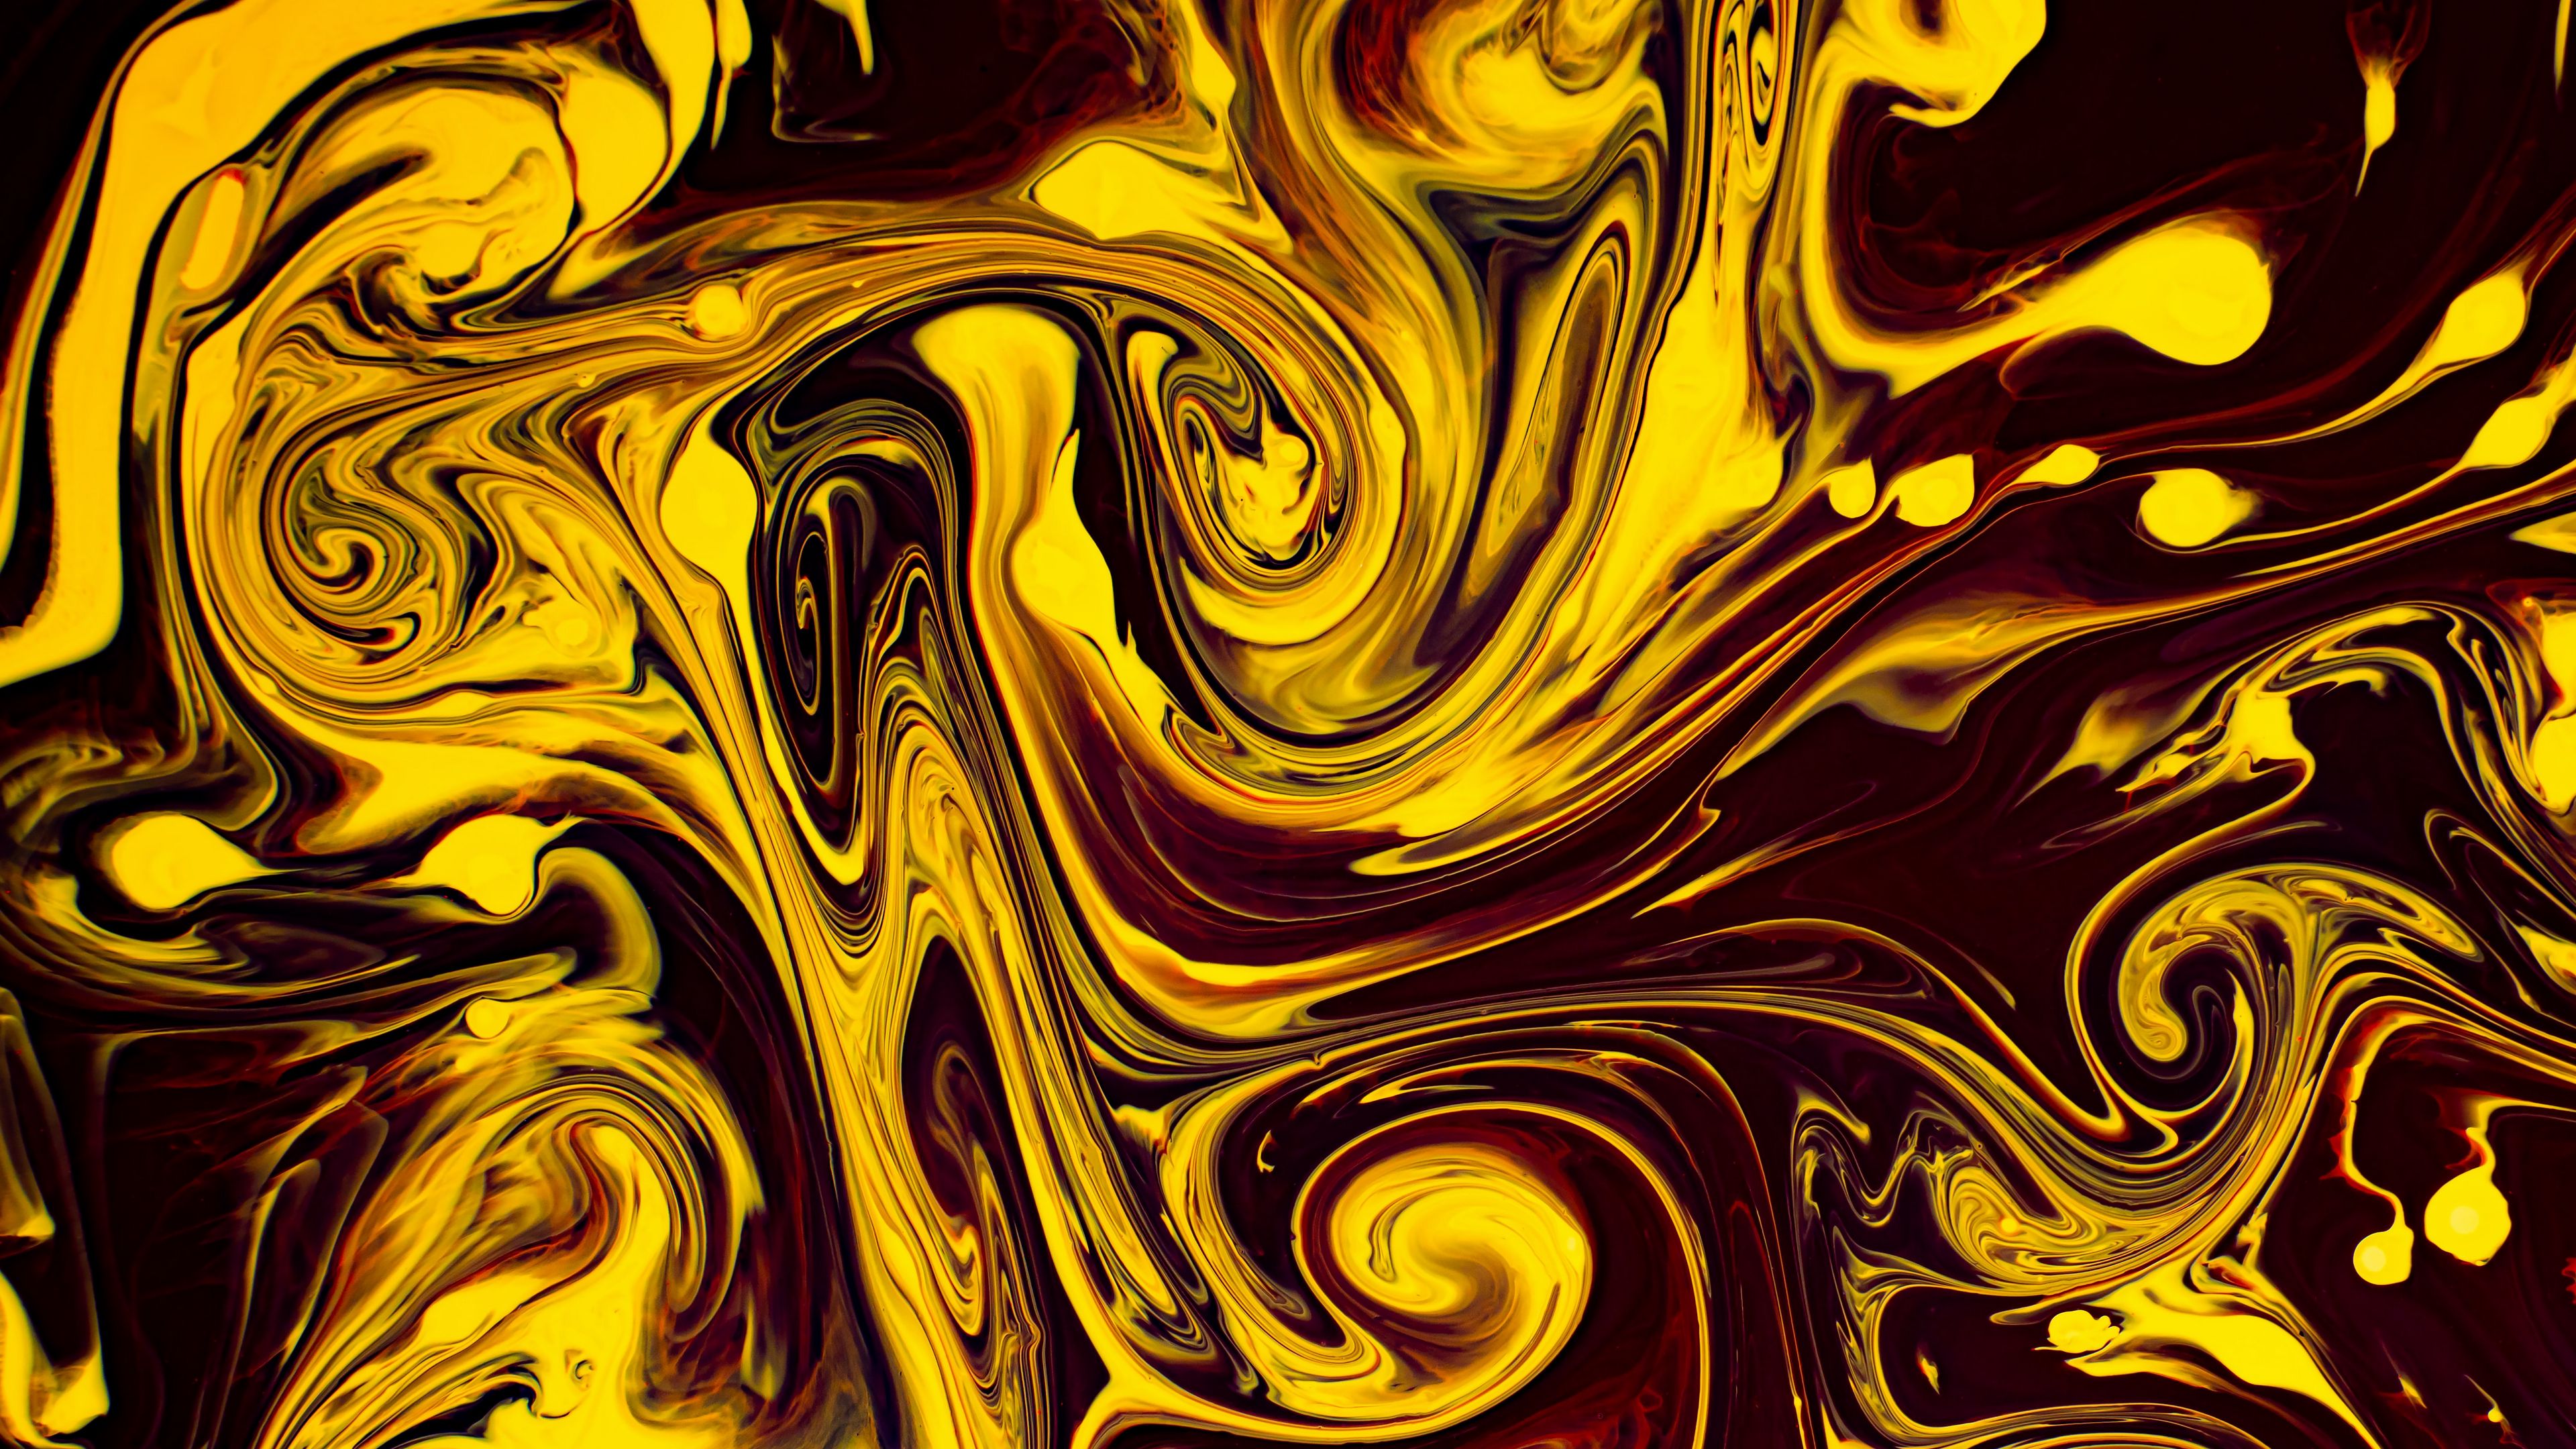 Liquid of color abstract Wallpaper 4k Ultra HD ID:4718